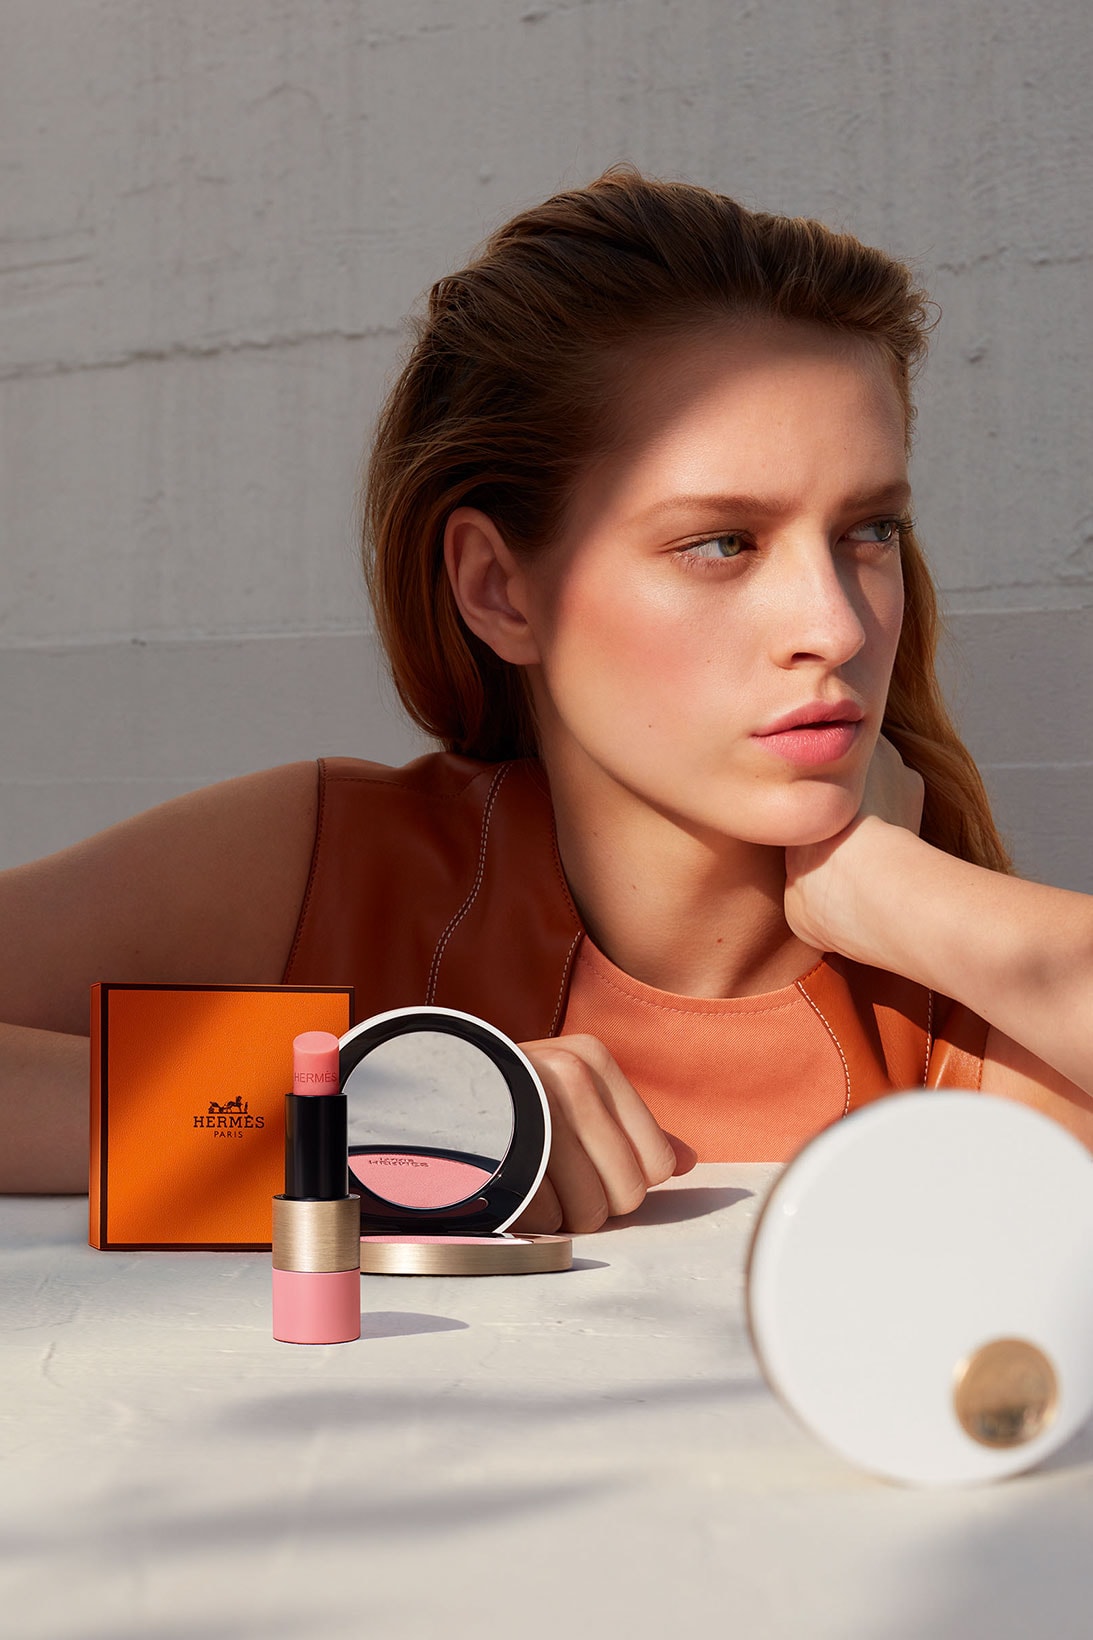 hermes beauty rose makeup lipsticks blush product packaging